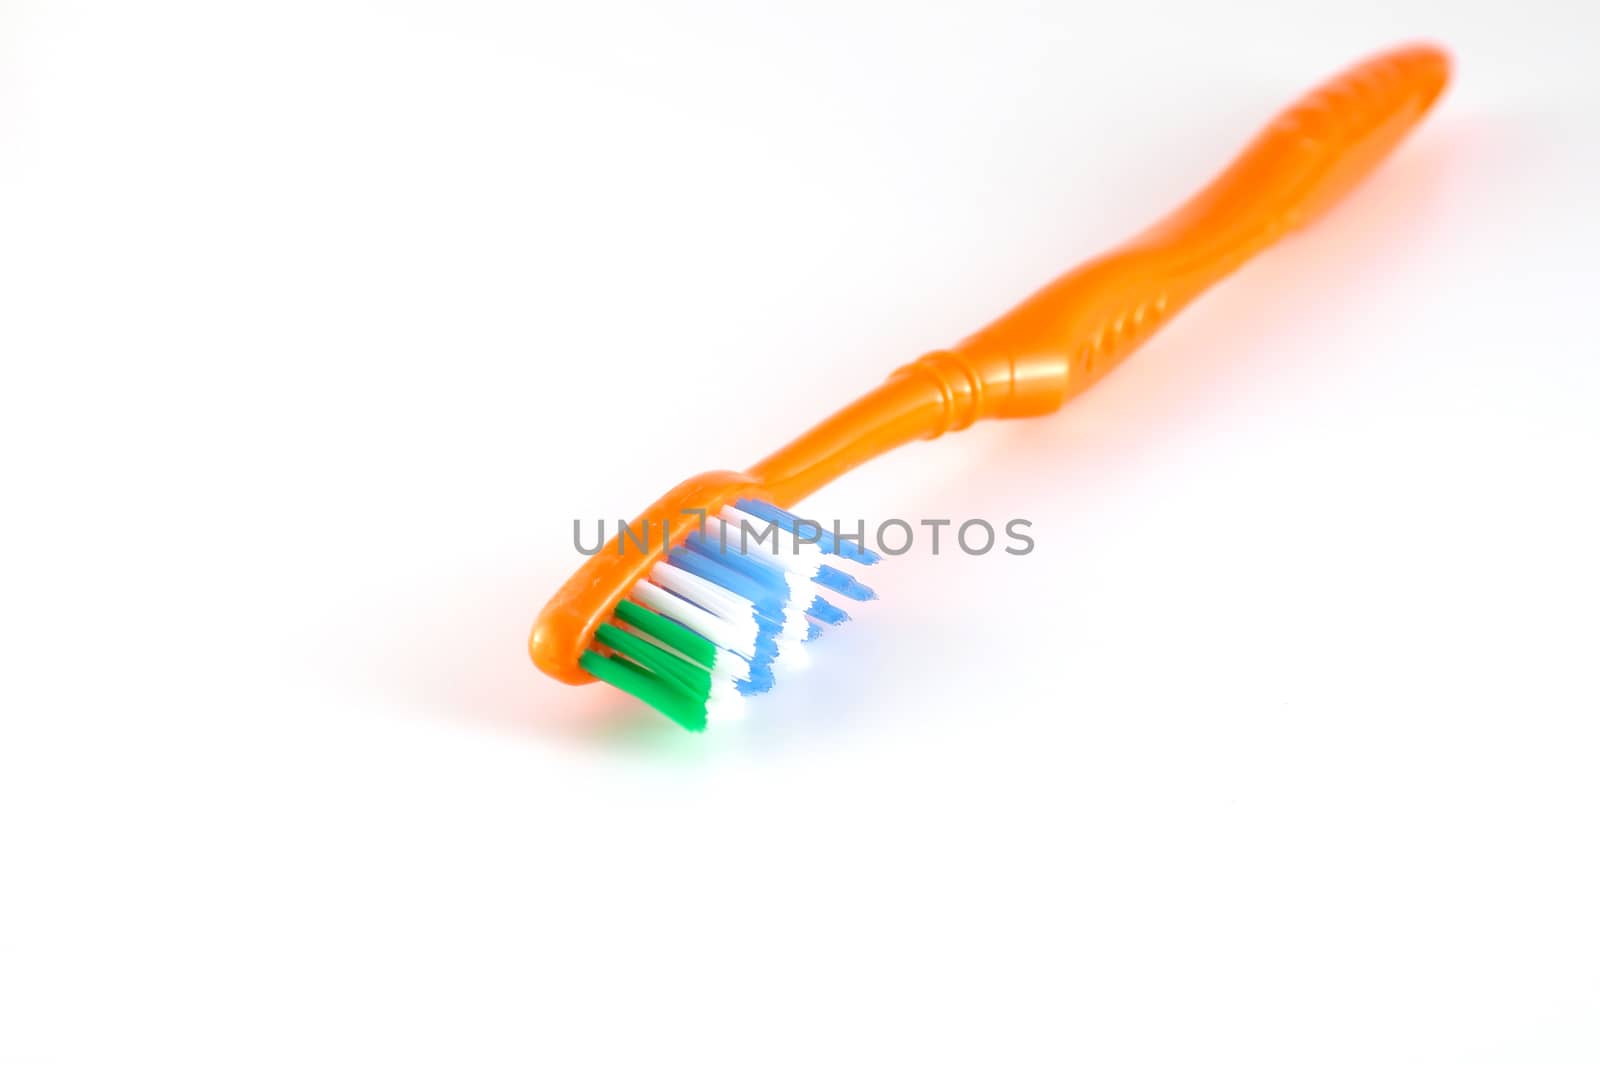 Orange toothbrush over neutral